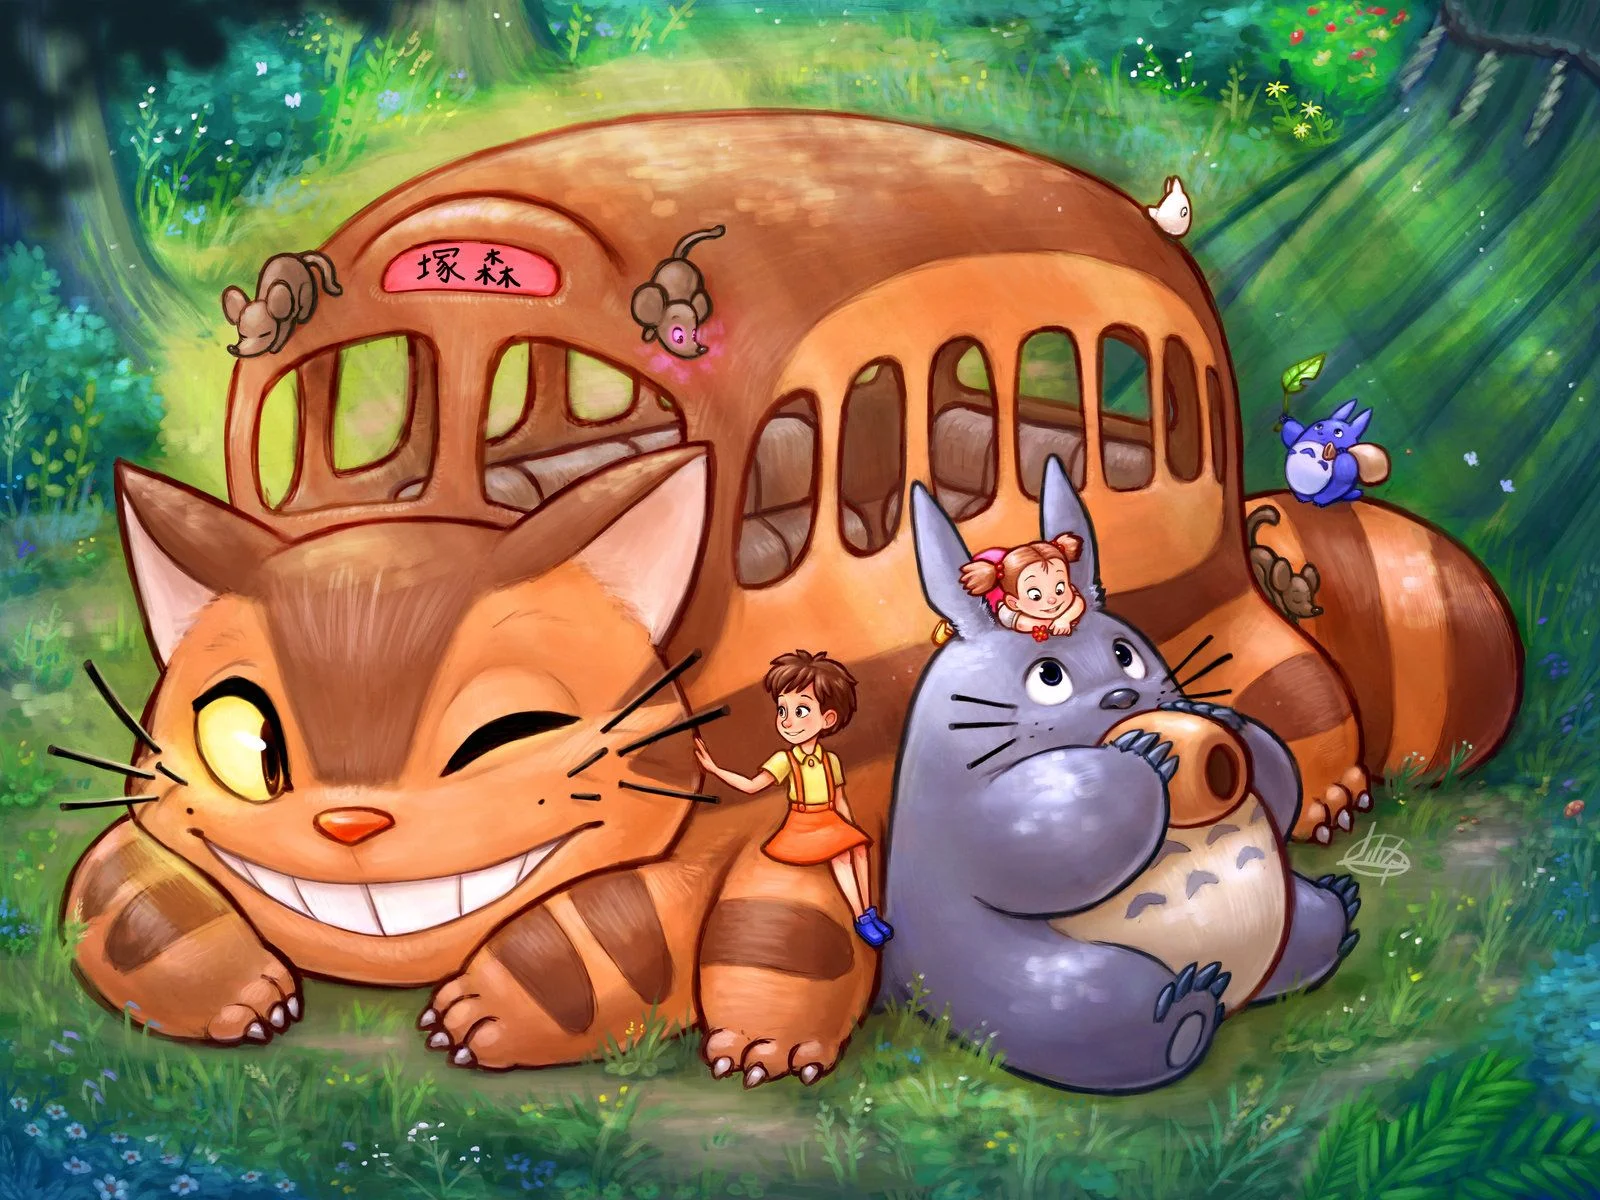 Toyota presented a “catbus” from the cartoon “My Neighbor Totoro” by Hayao Miyazaki